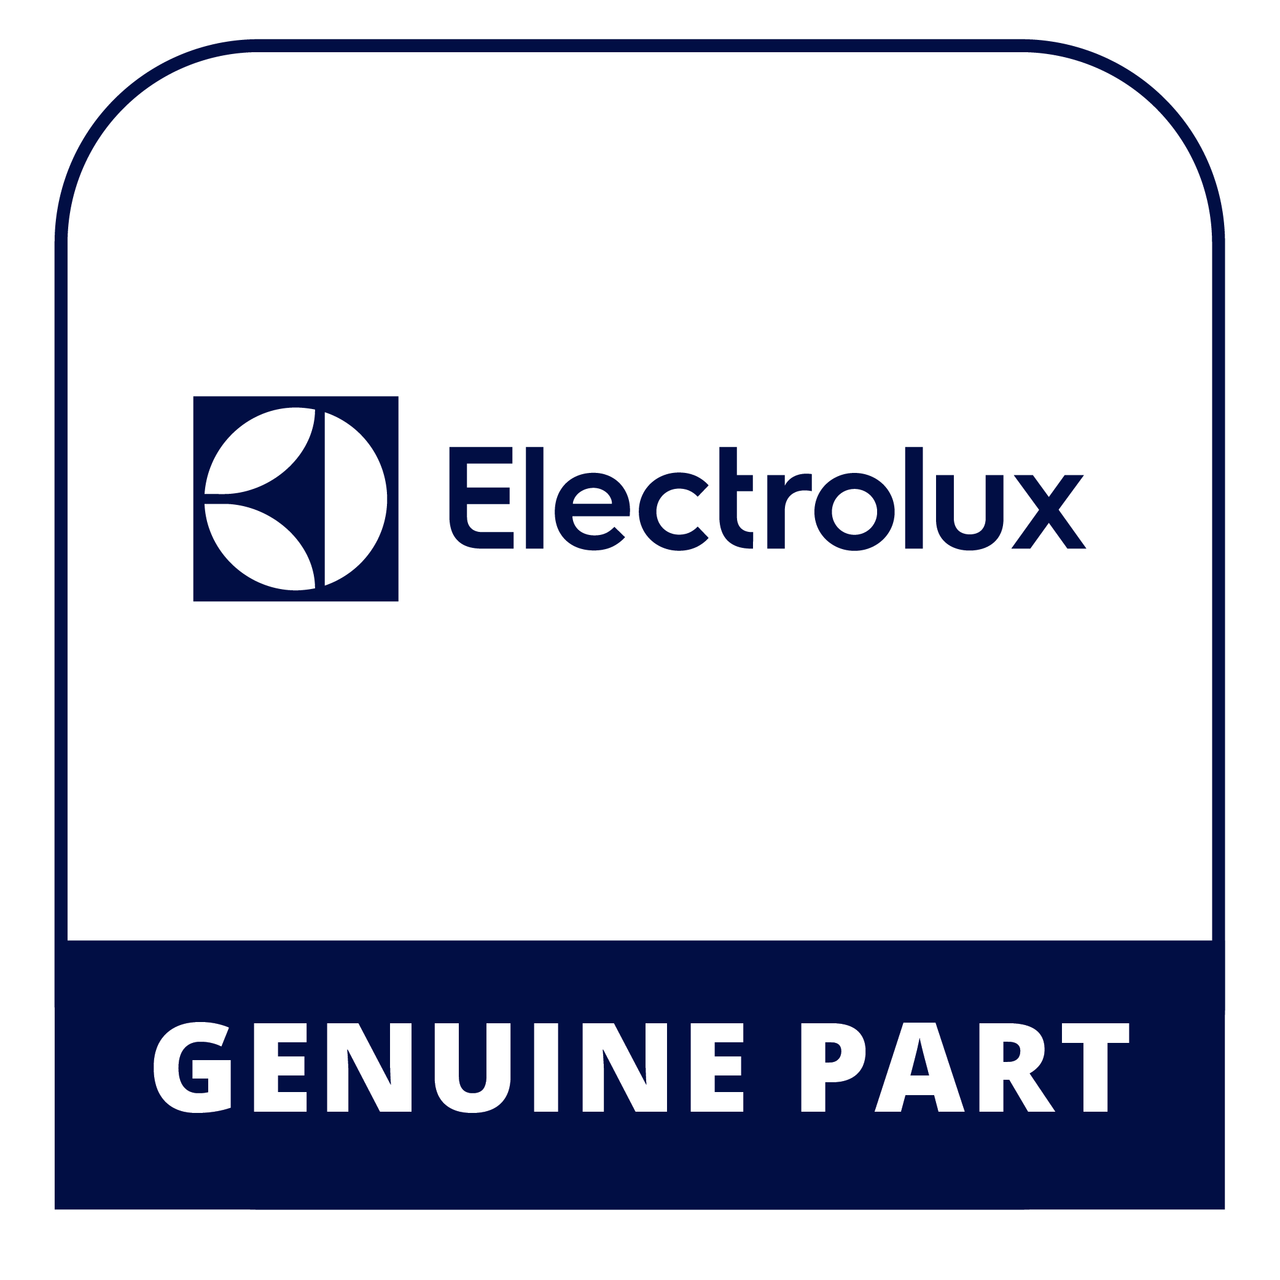 Frigidaire - Electrolux 316605326 Panel - Genuine Electrolux Part